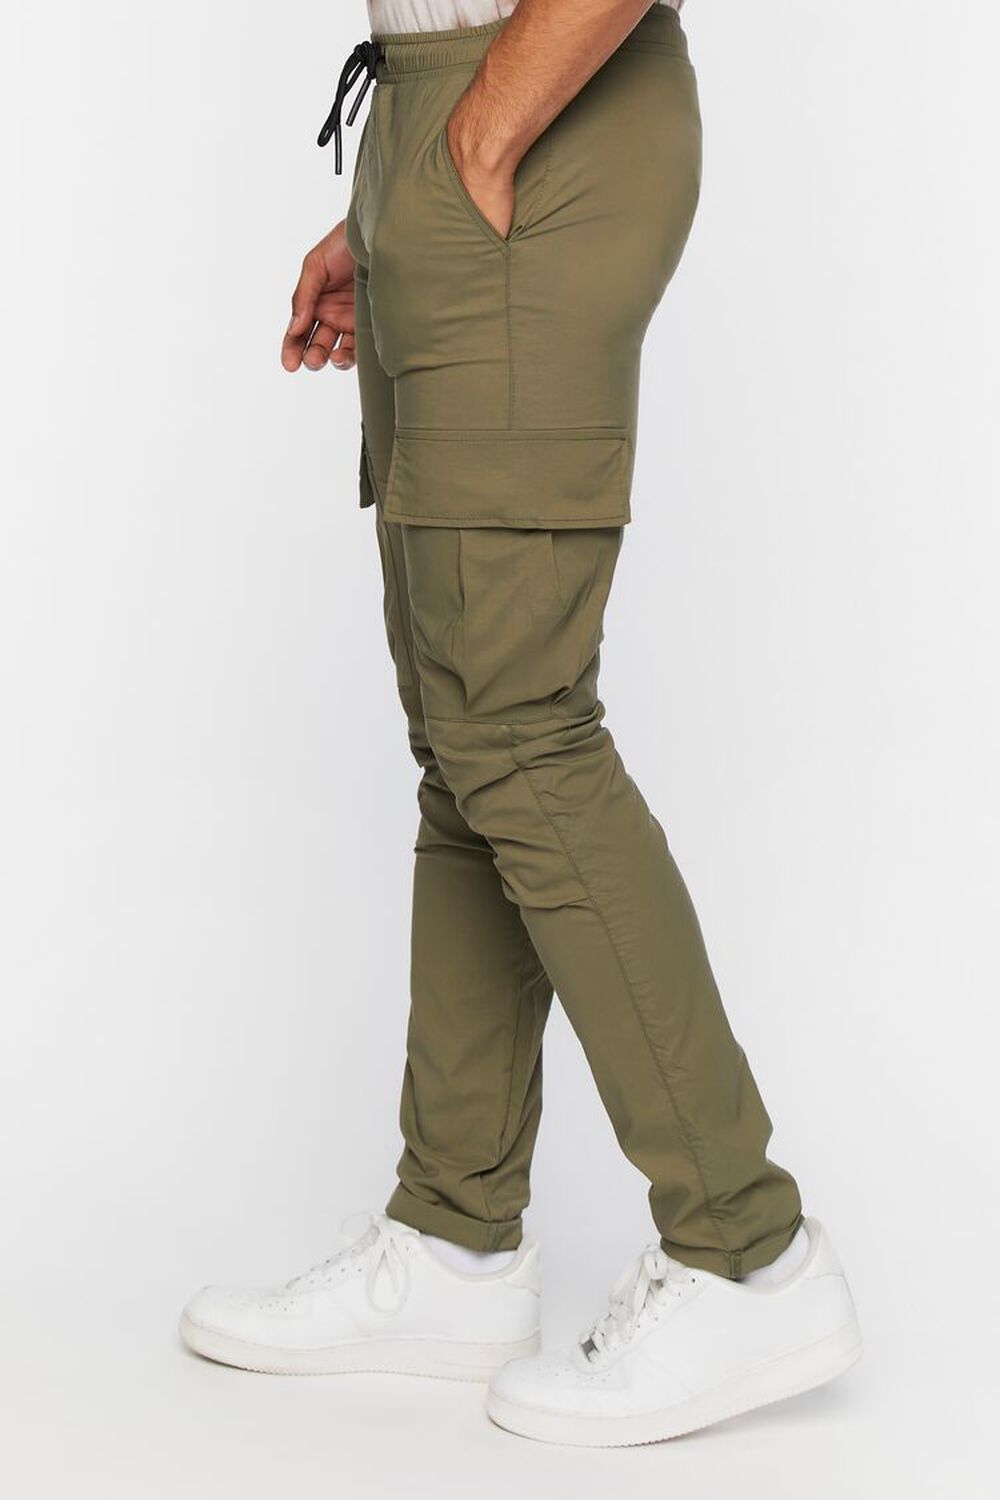 OLIVE/MULTI Drawstring Skinny Utility Pants, image 3